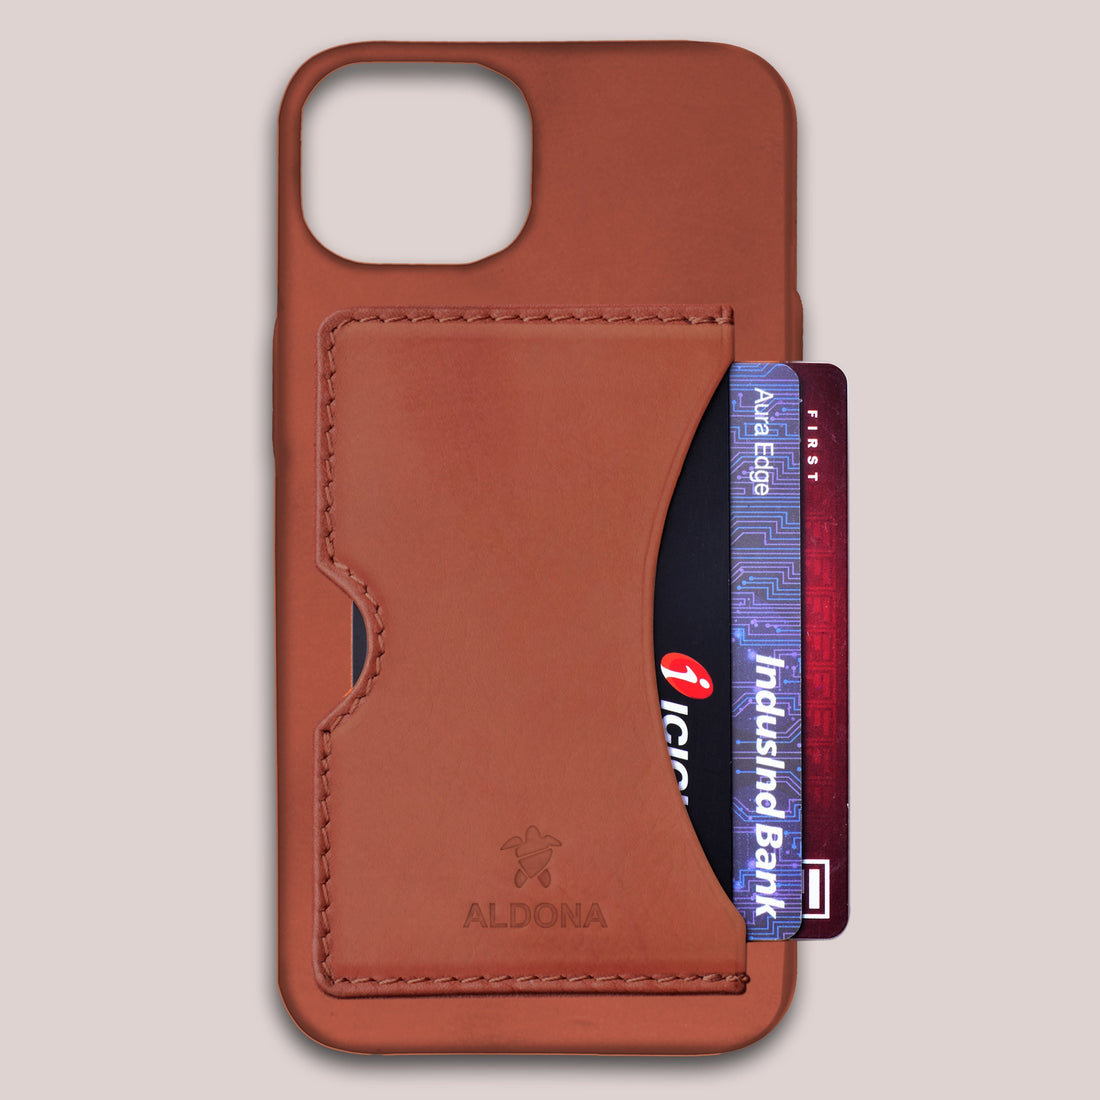 Baxter Card Case for iPhone 12 Pro - Cognac